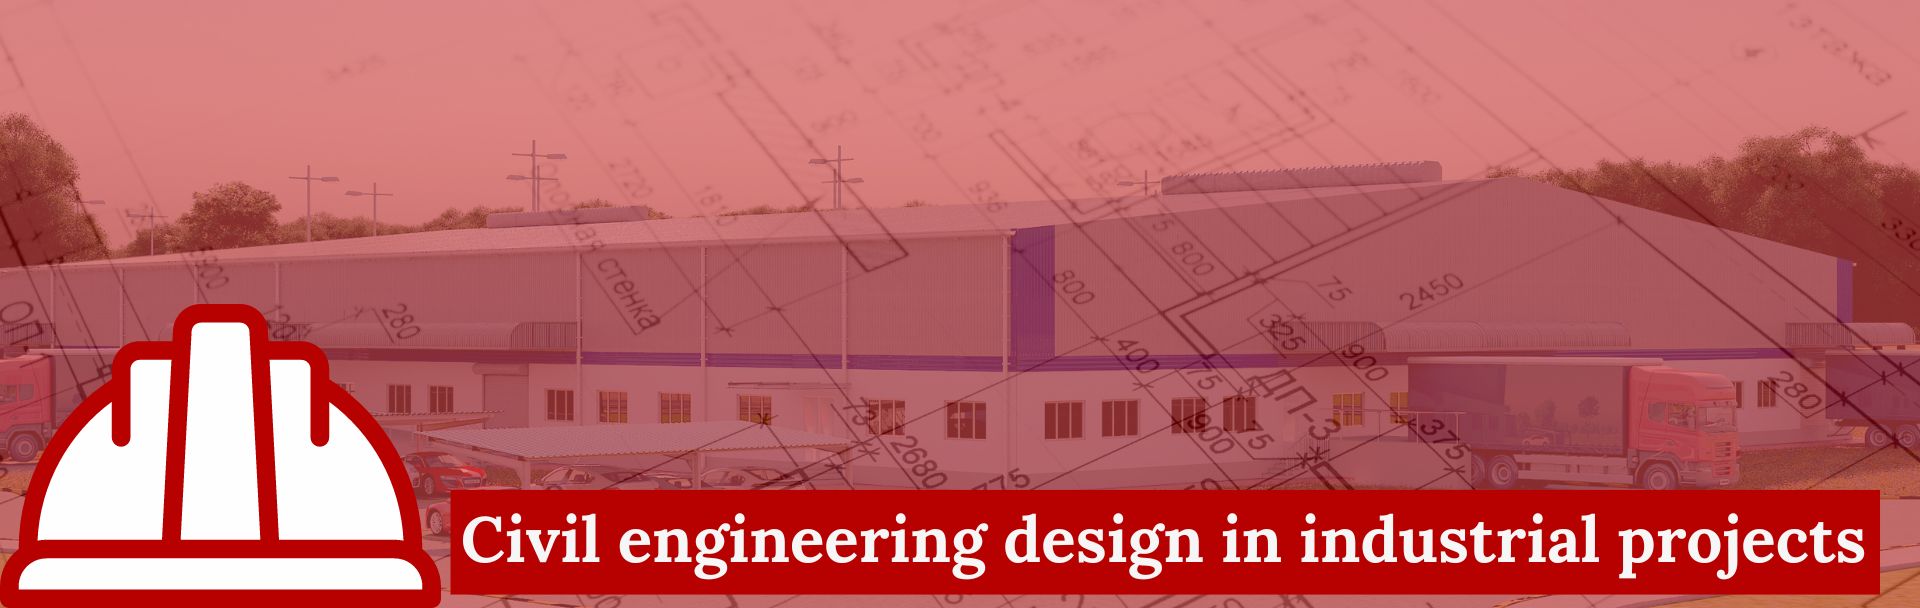 Industrial civil engineering design